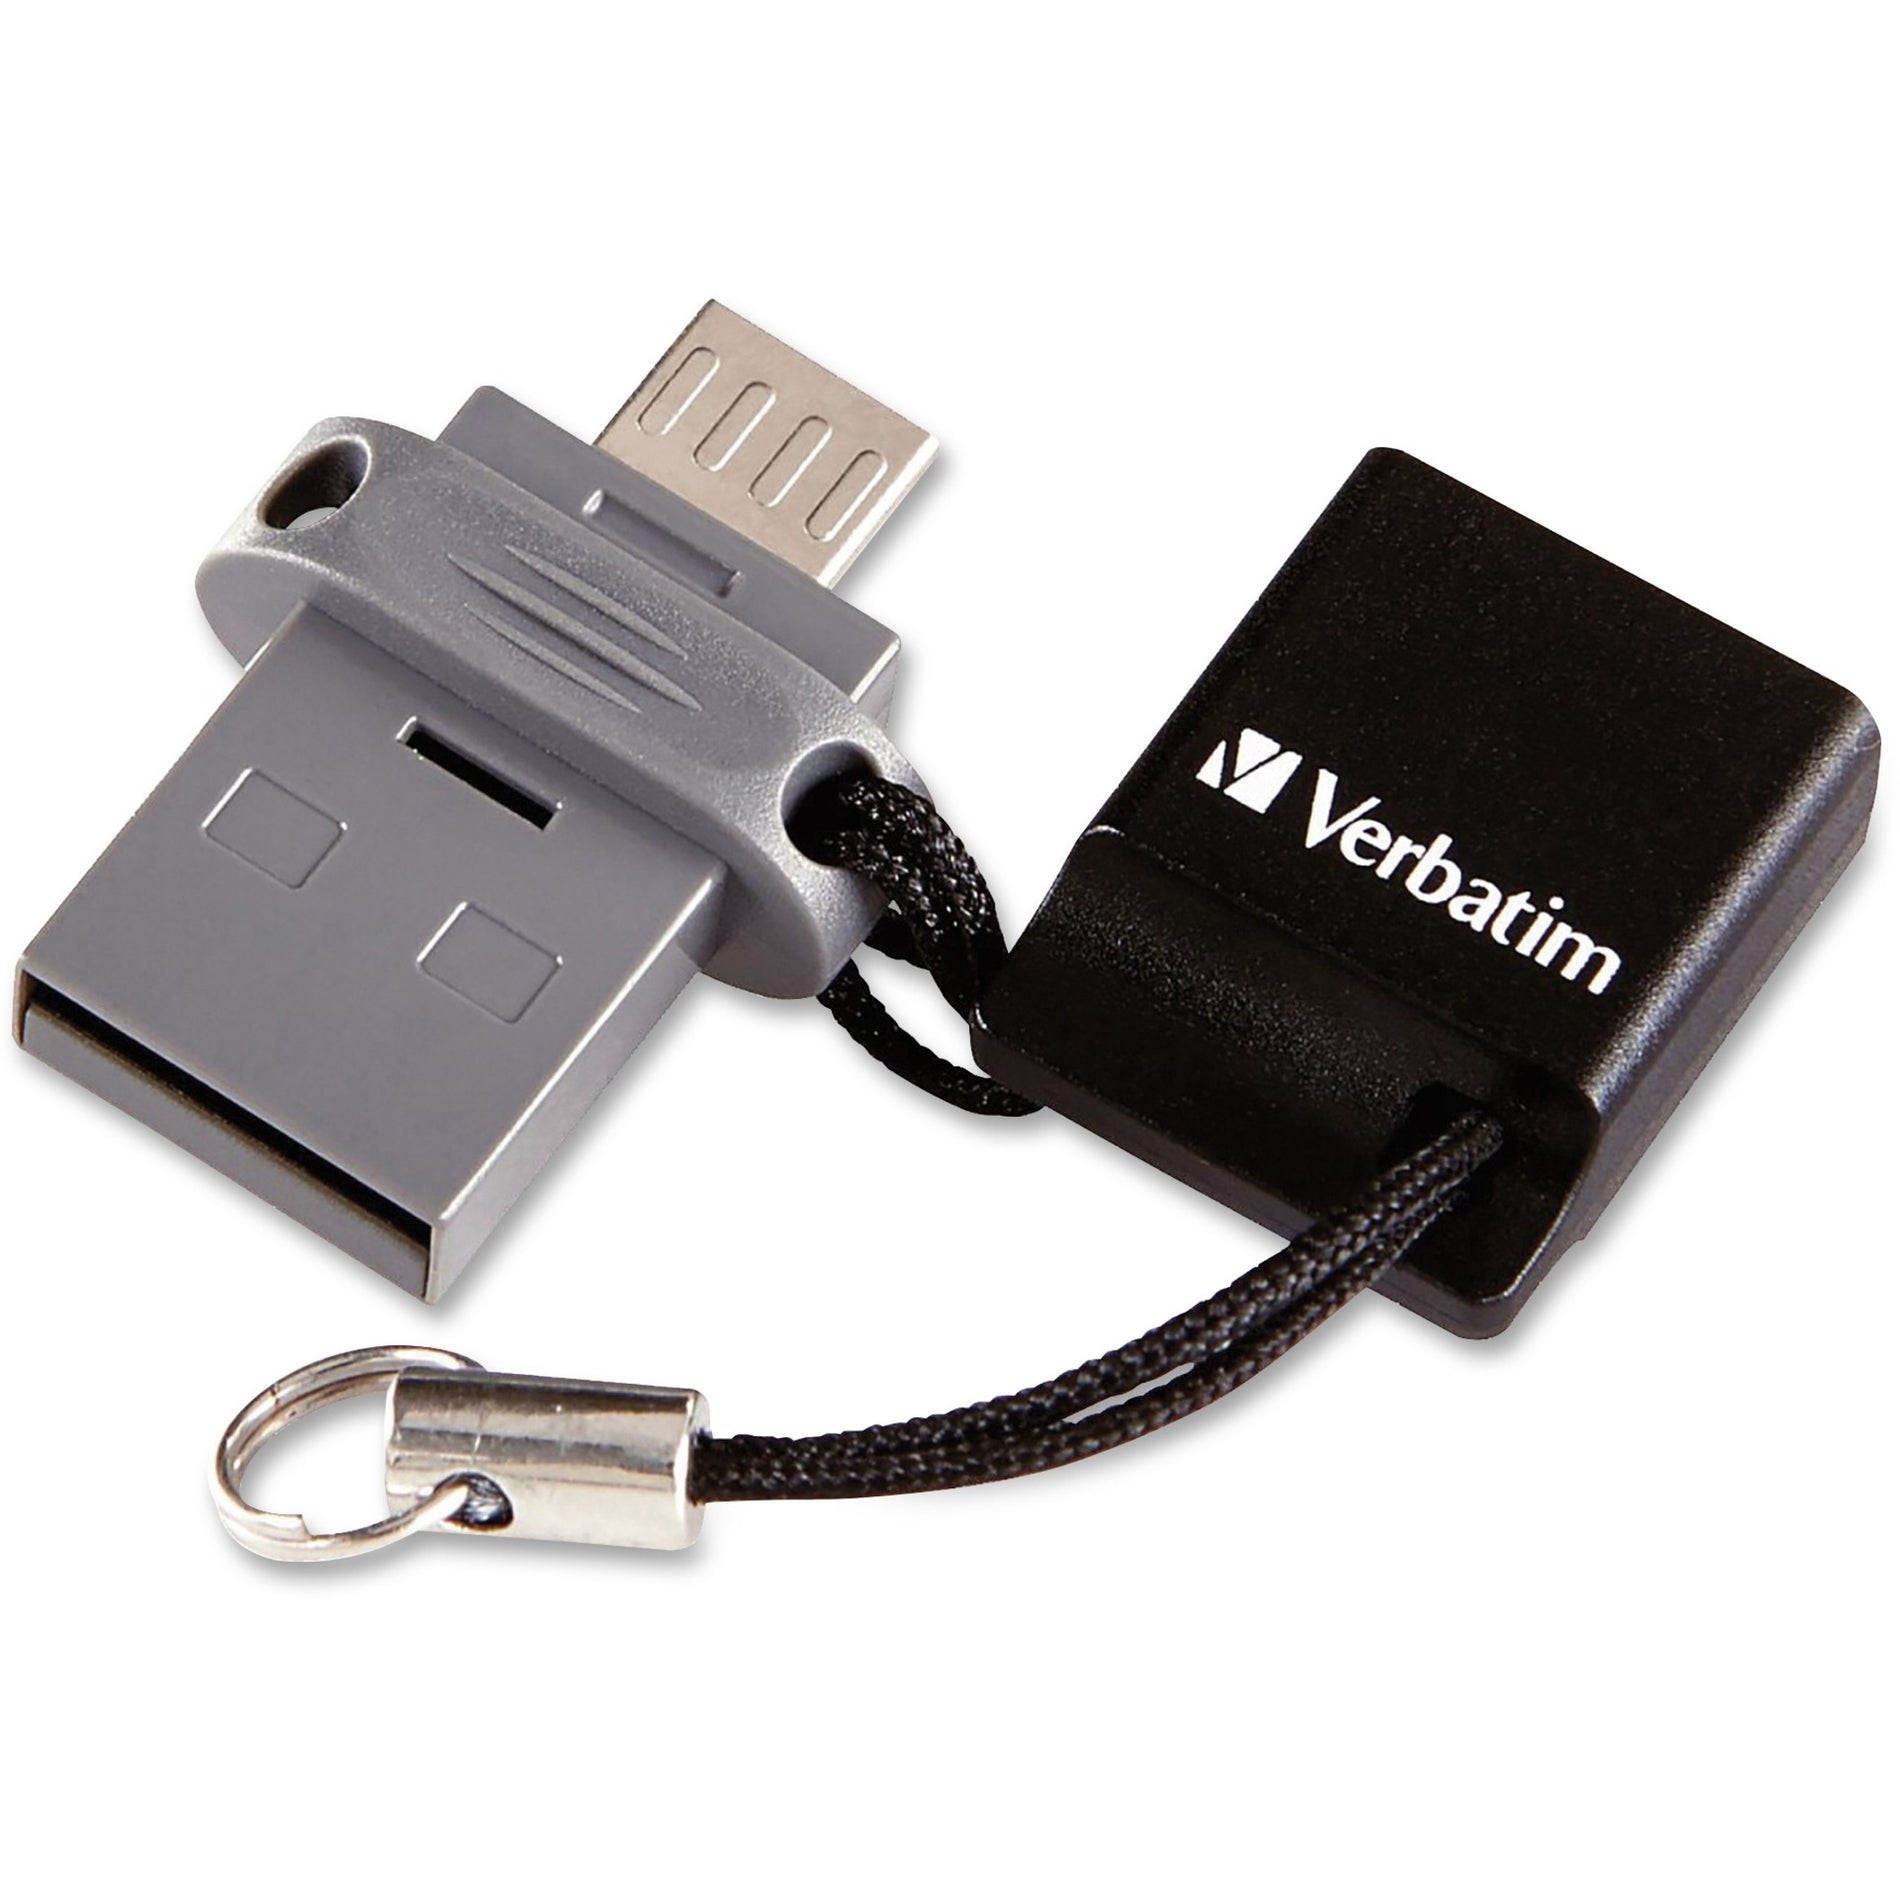 Verbatim 99140 Store 'n' Go Dual USB Flash Drive 64GB Black/Gray